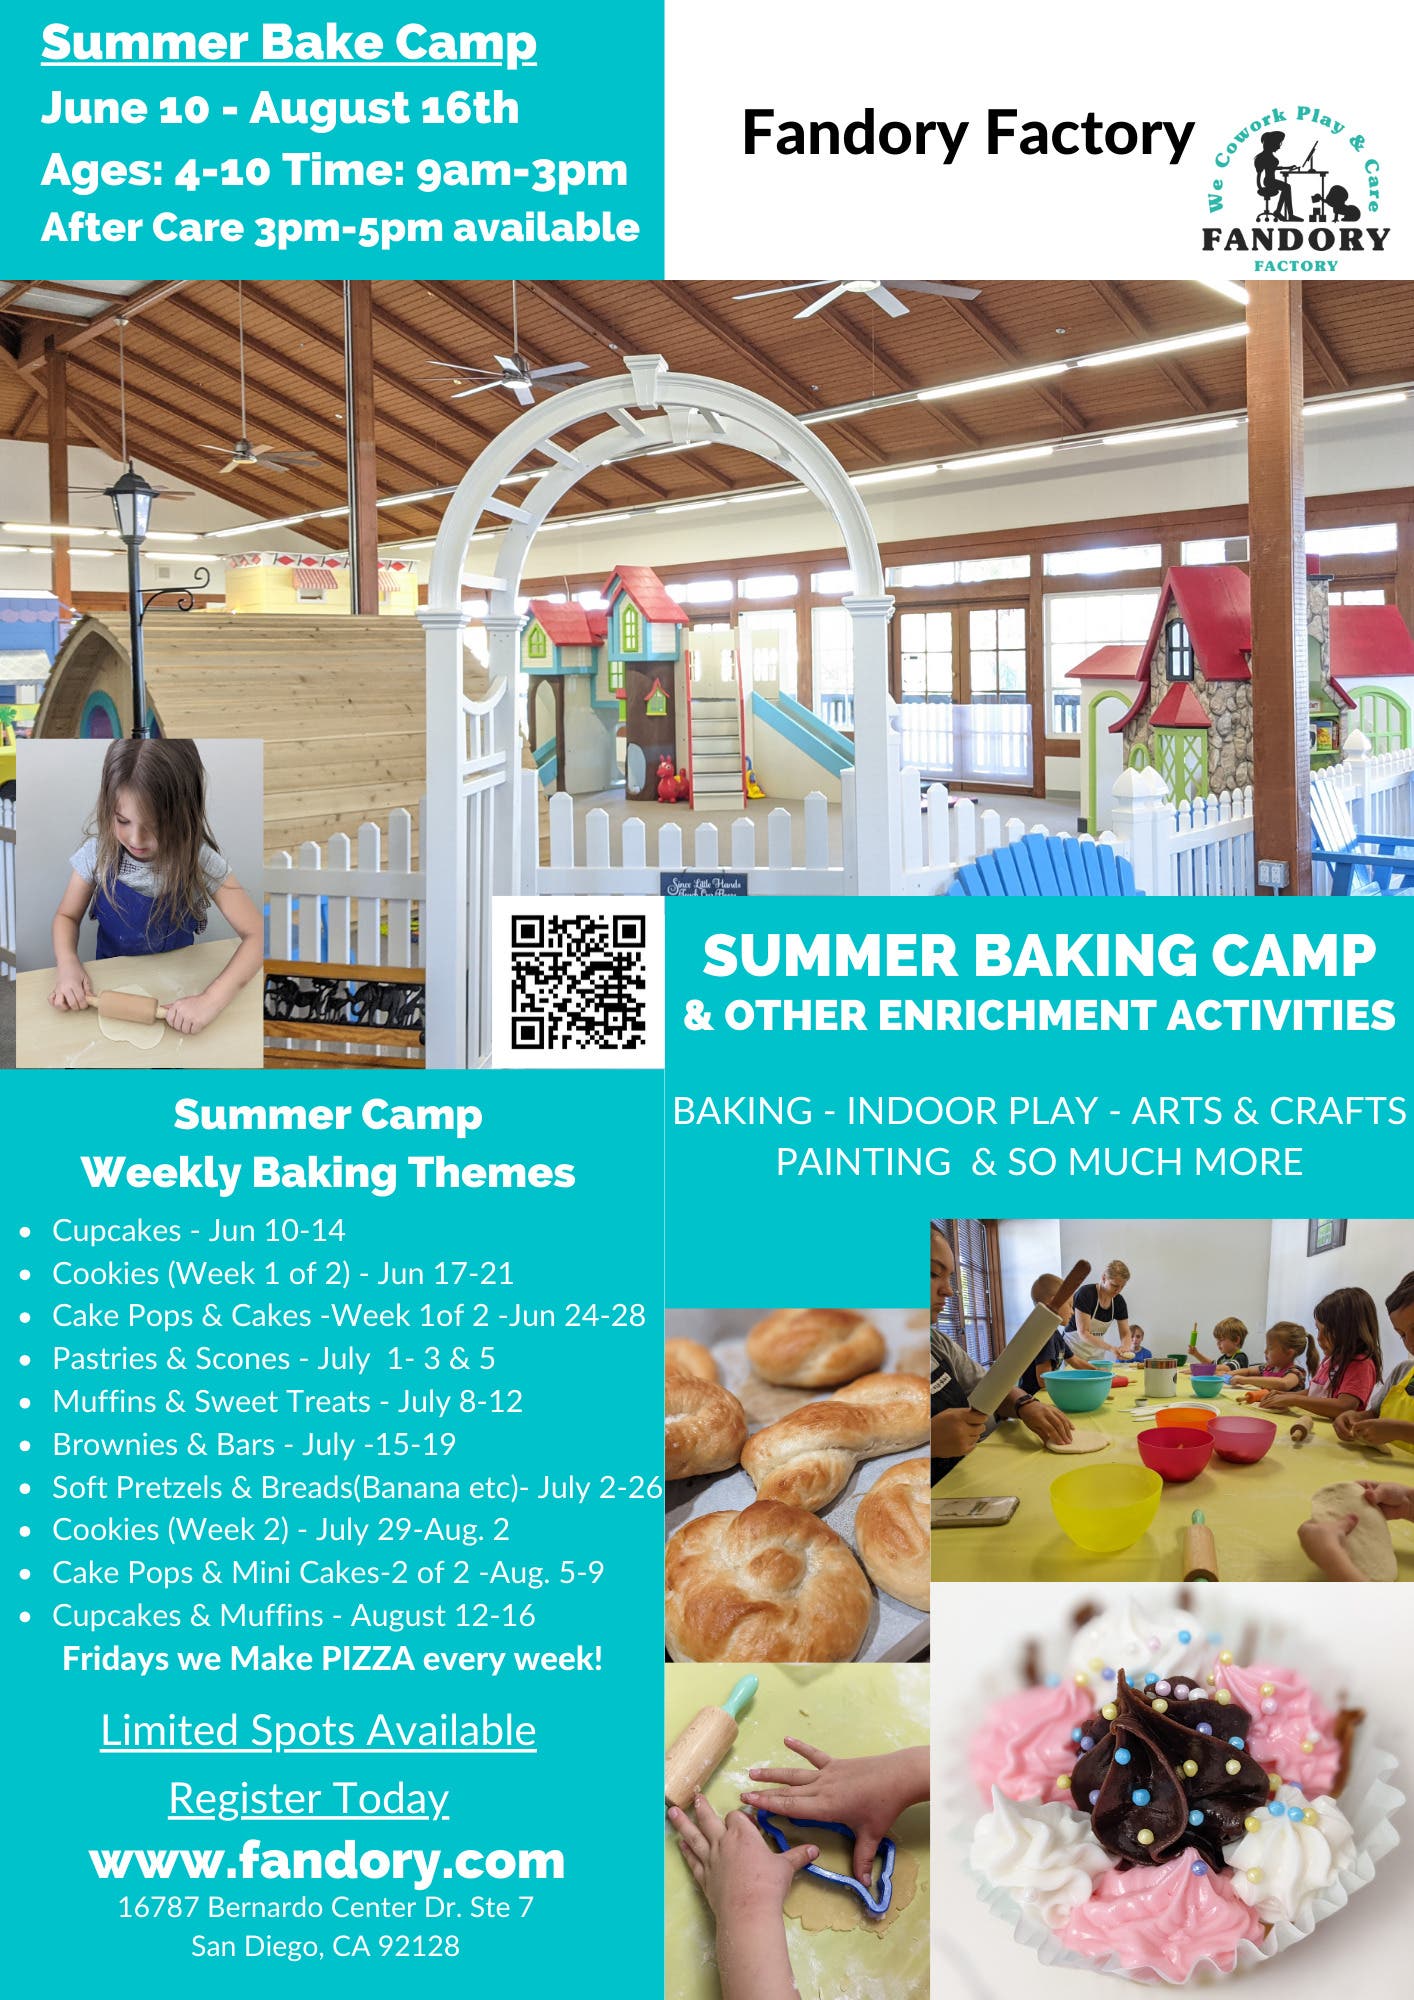 Kids Baking Camp - Soft Pretzels & Breads at Fandory